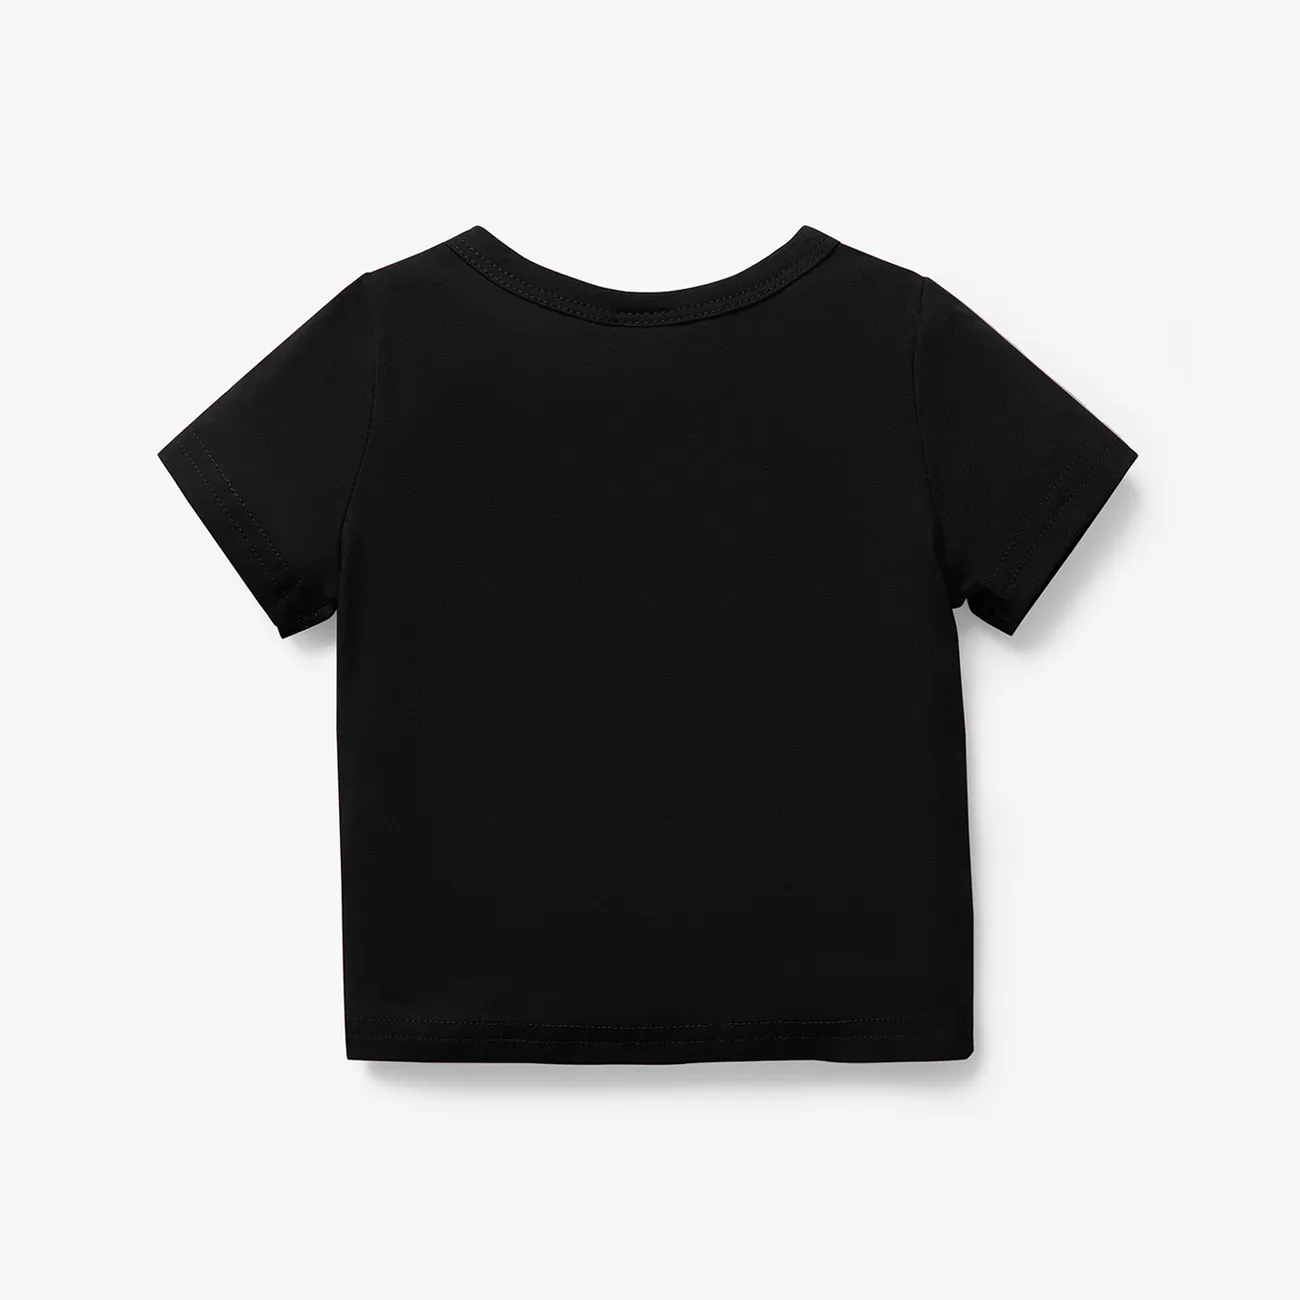 Vatertag Baby Unisex Lässig Kurzärmelig T-Shirts schwarz big image 1